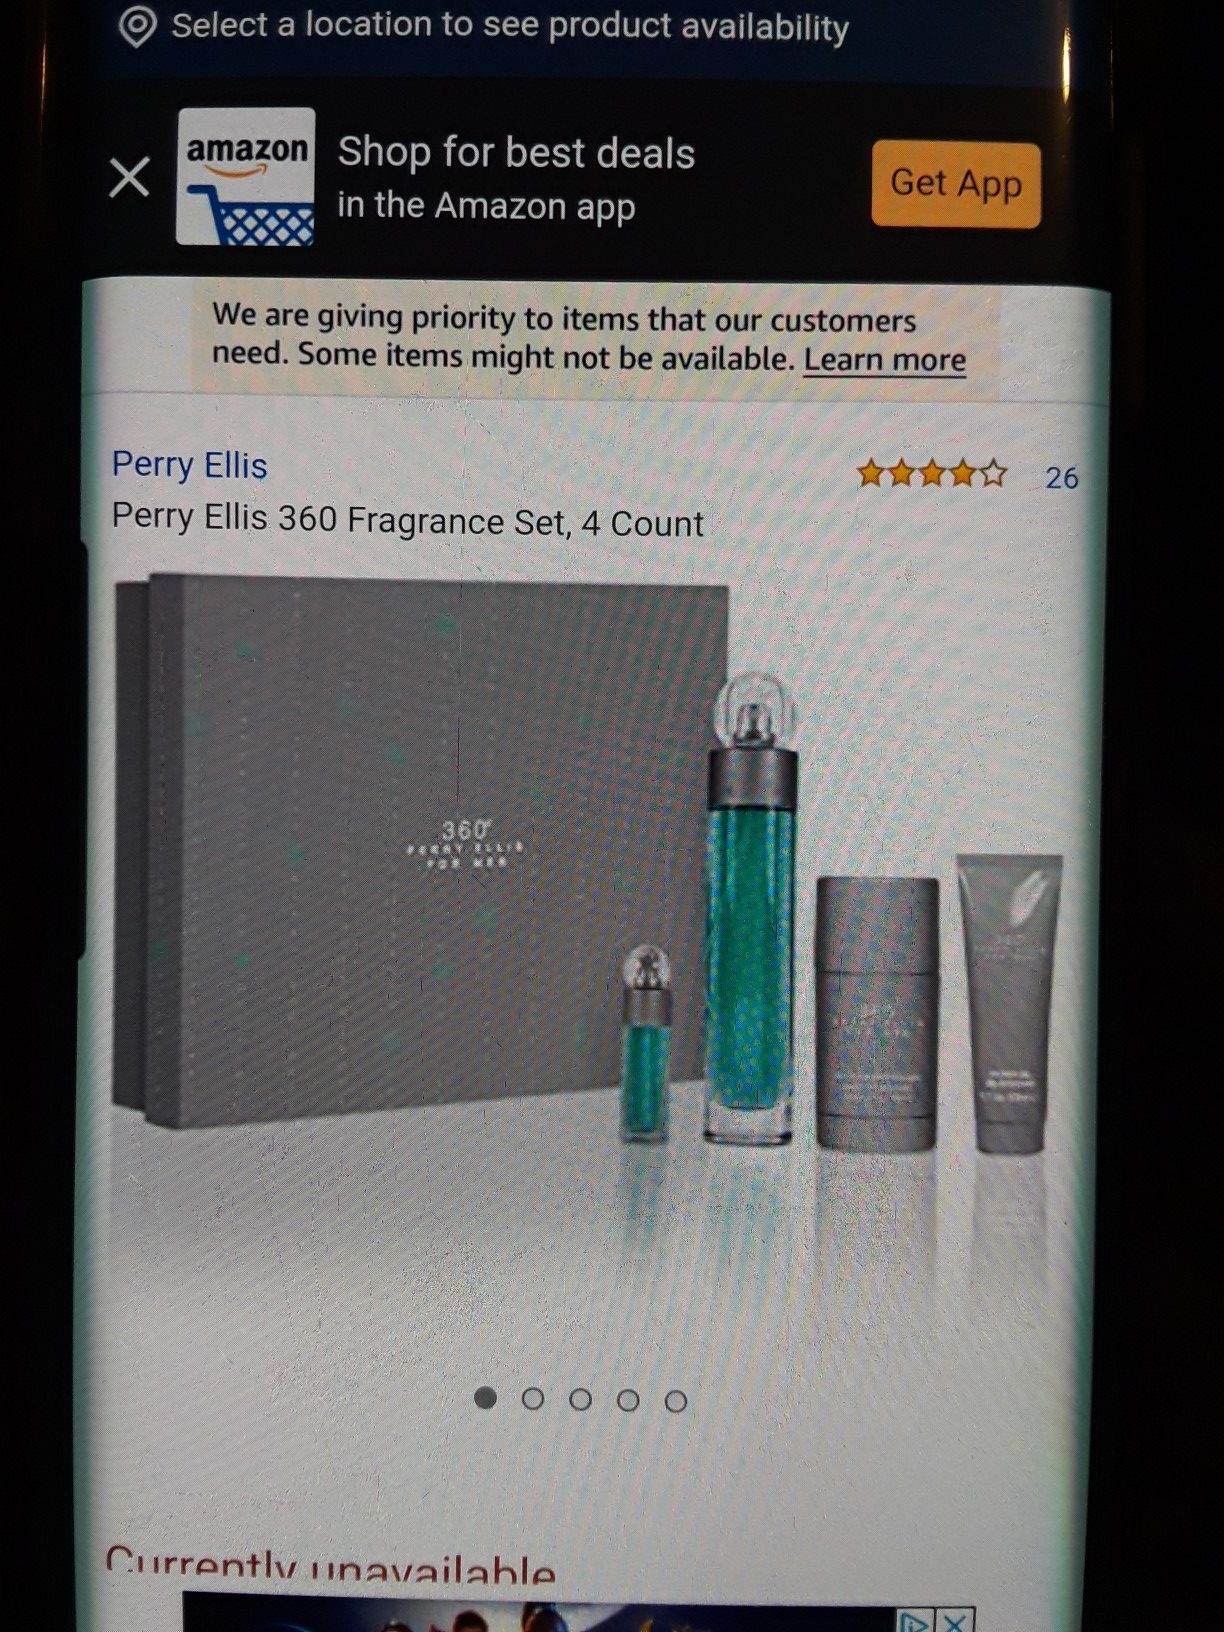 Perry ellis 360 fragrance set of 4